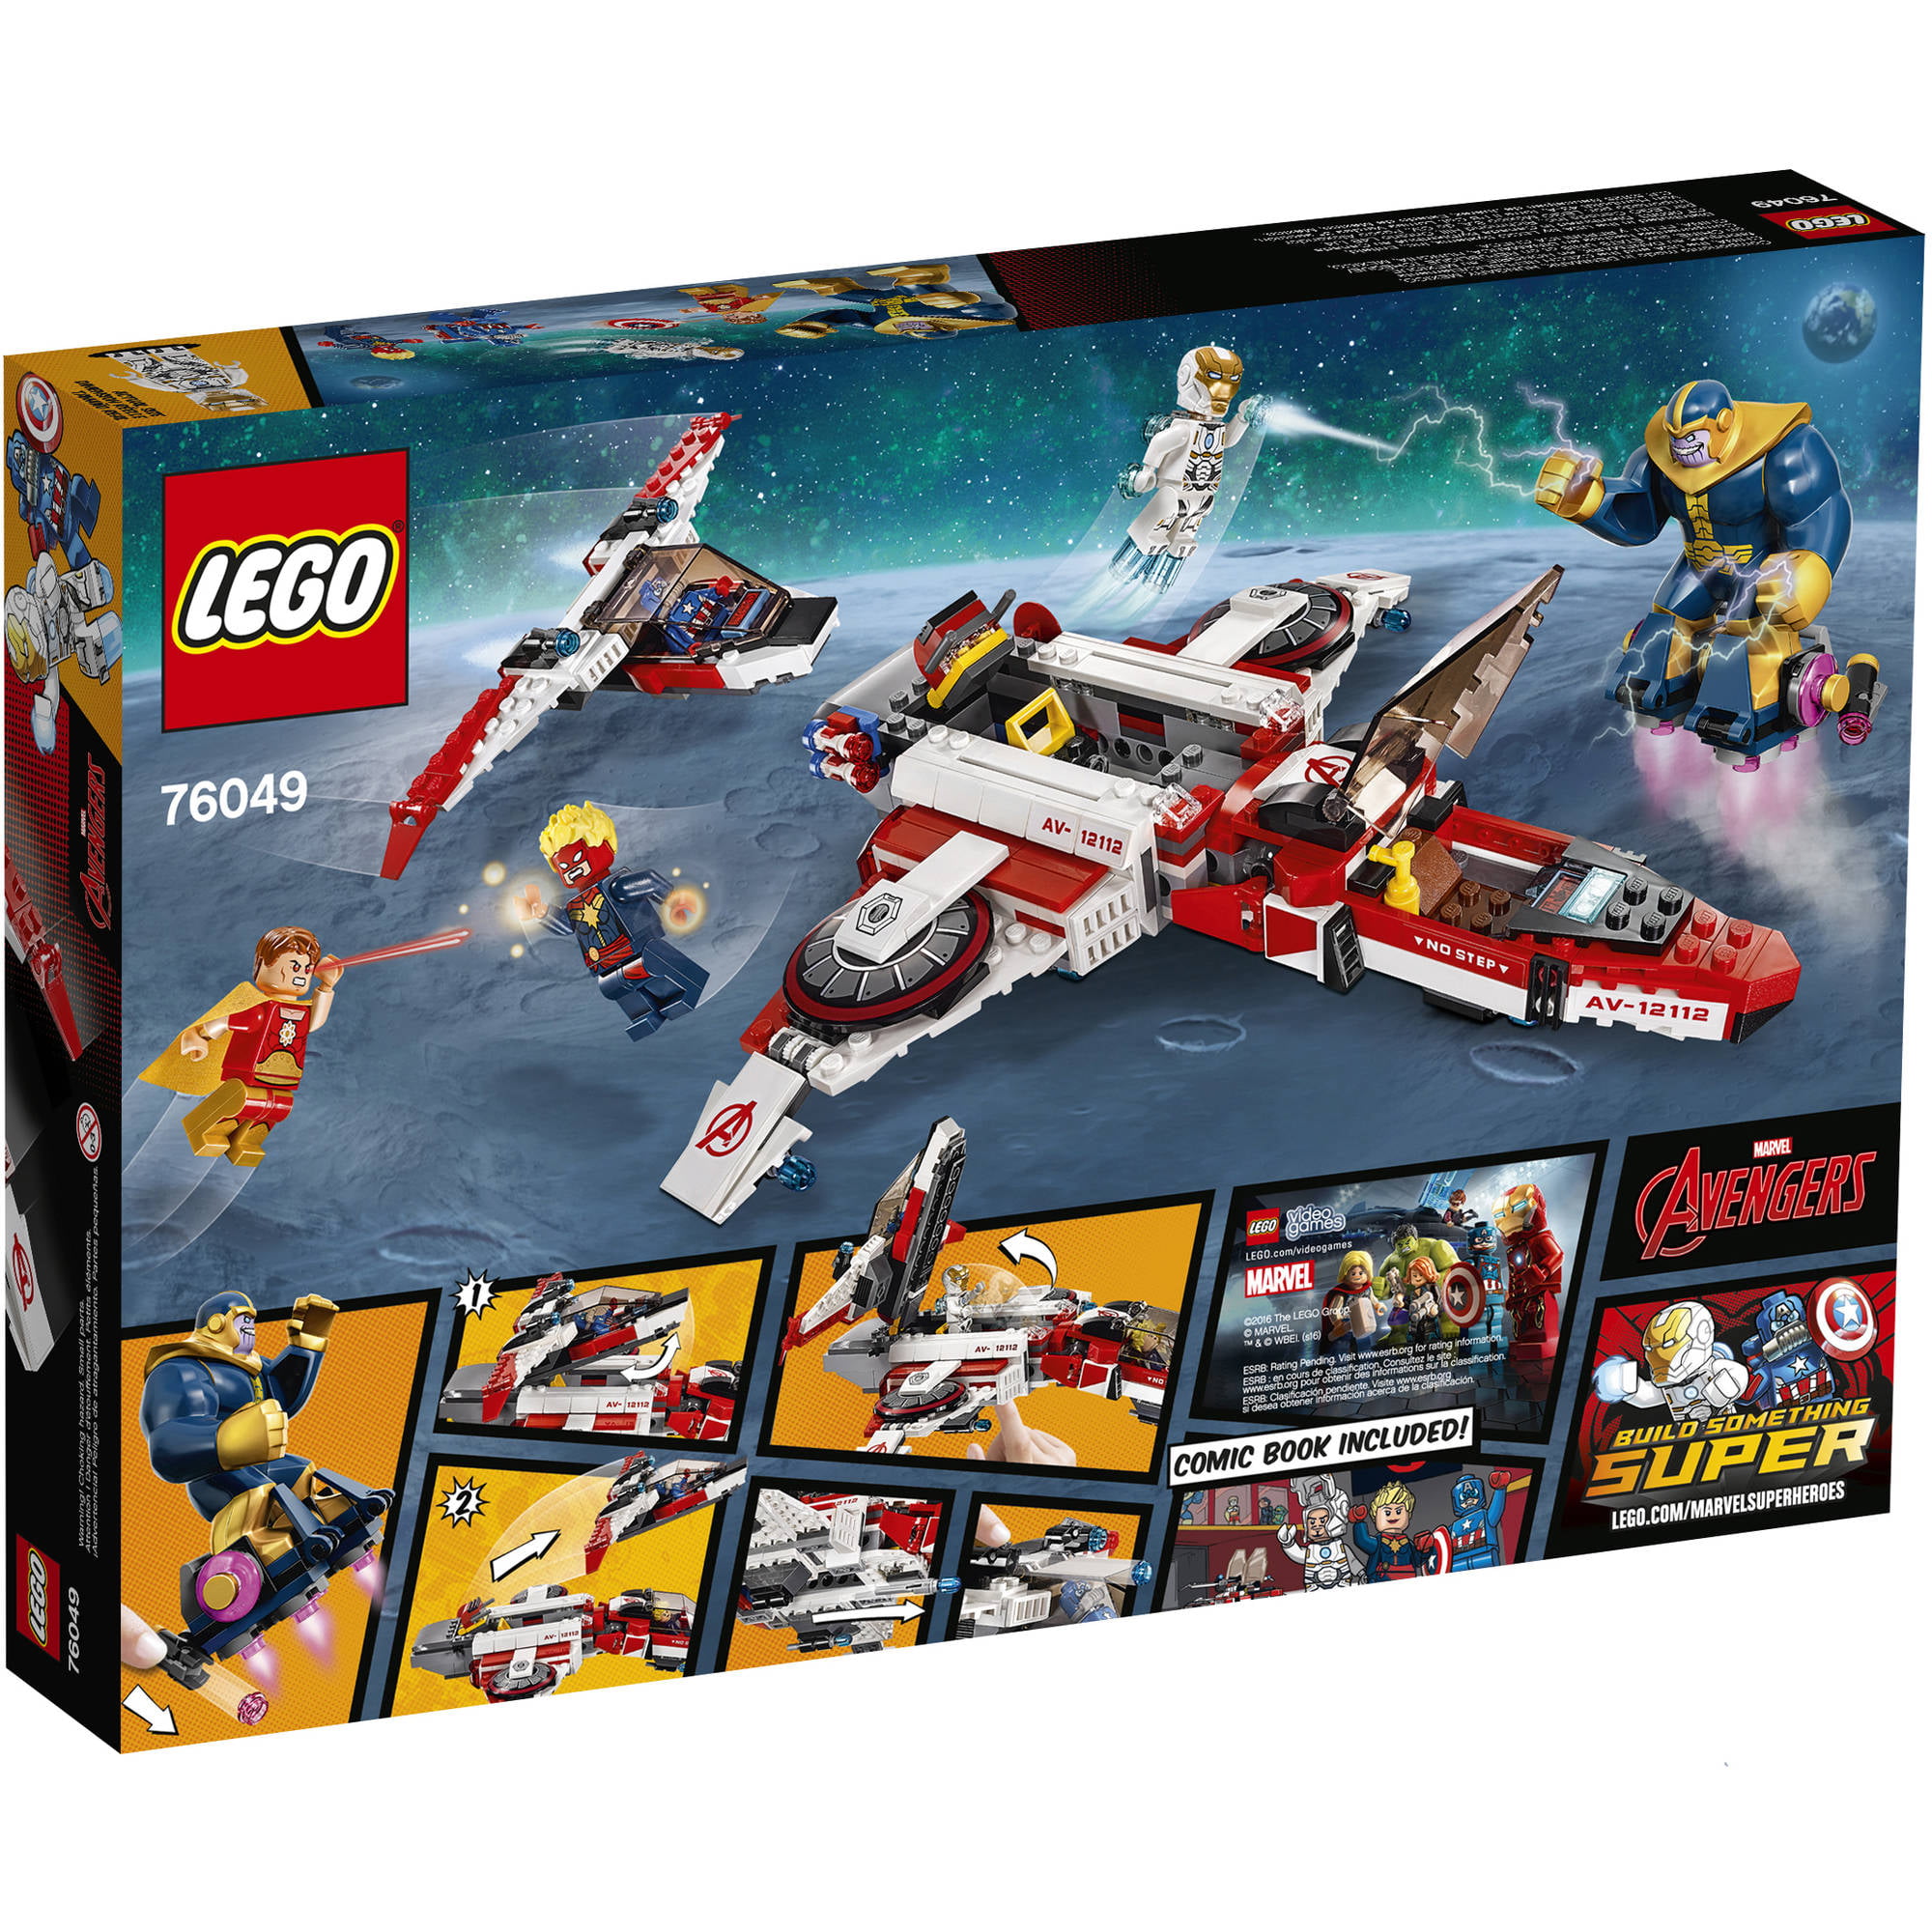 LEGO Super Heroes Avenjet Mission, 76049 Walmart.com